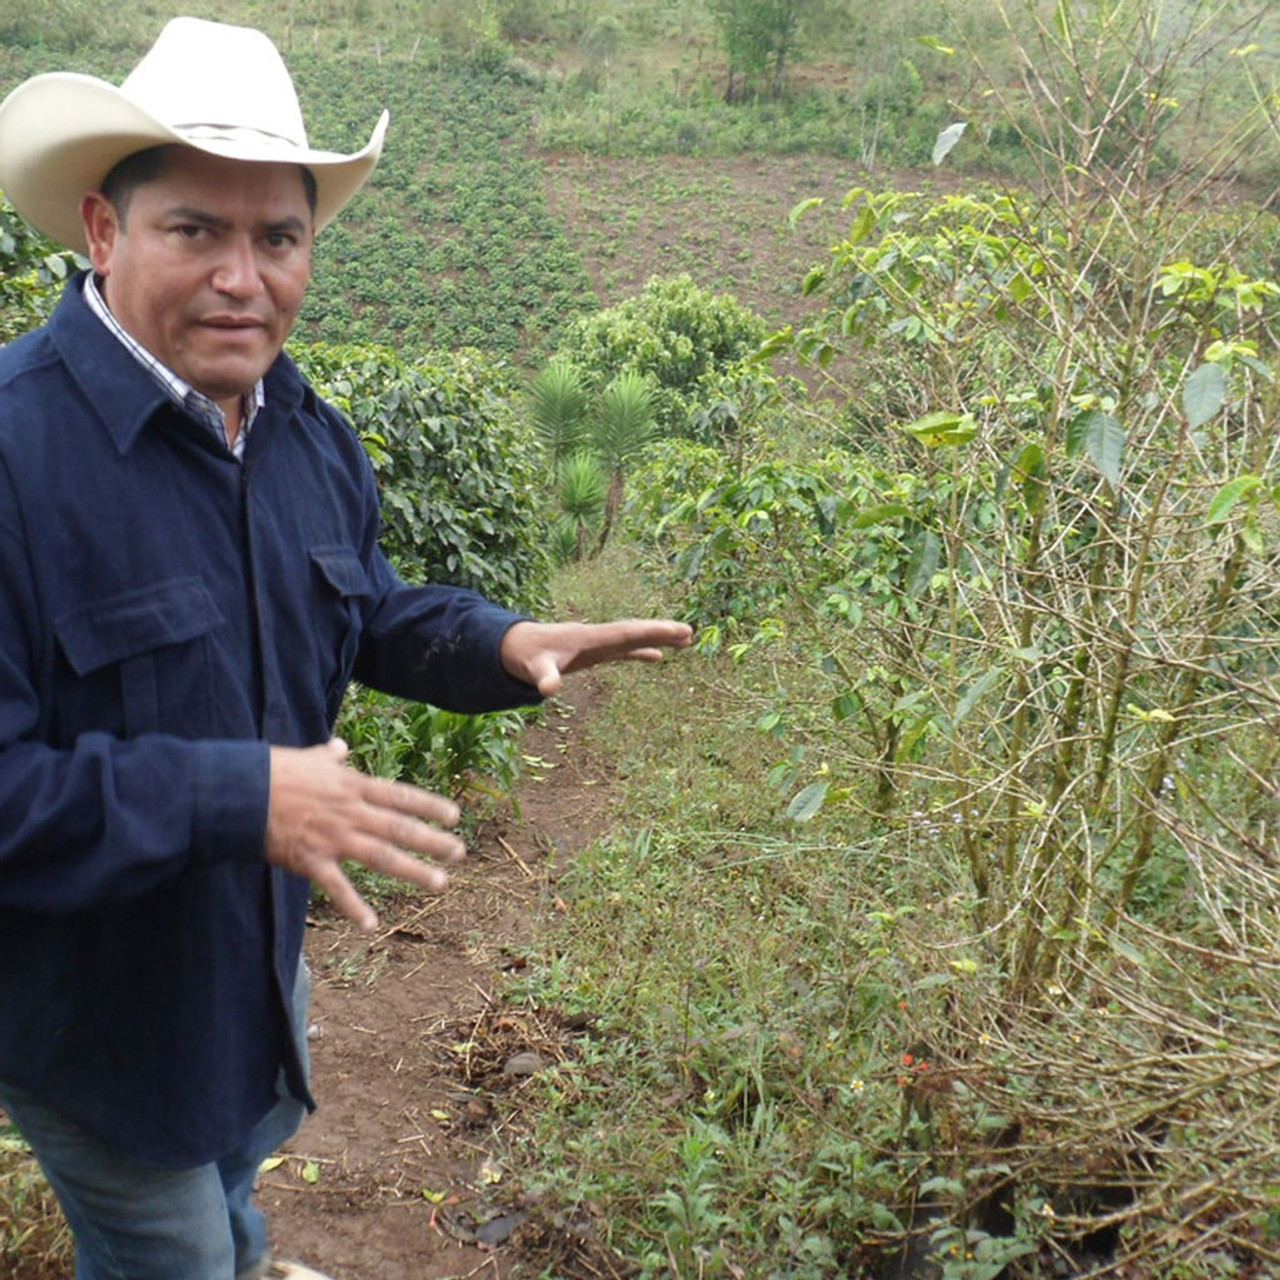 ☕Café en grano natural. 100% Arabica. Origen Honduras, 1kg. Tostado  artesano | Quality Roasters Coffees